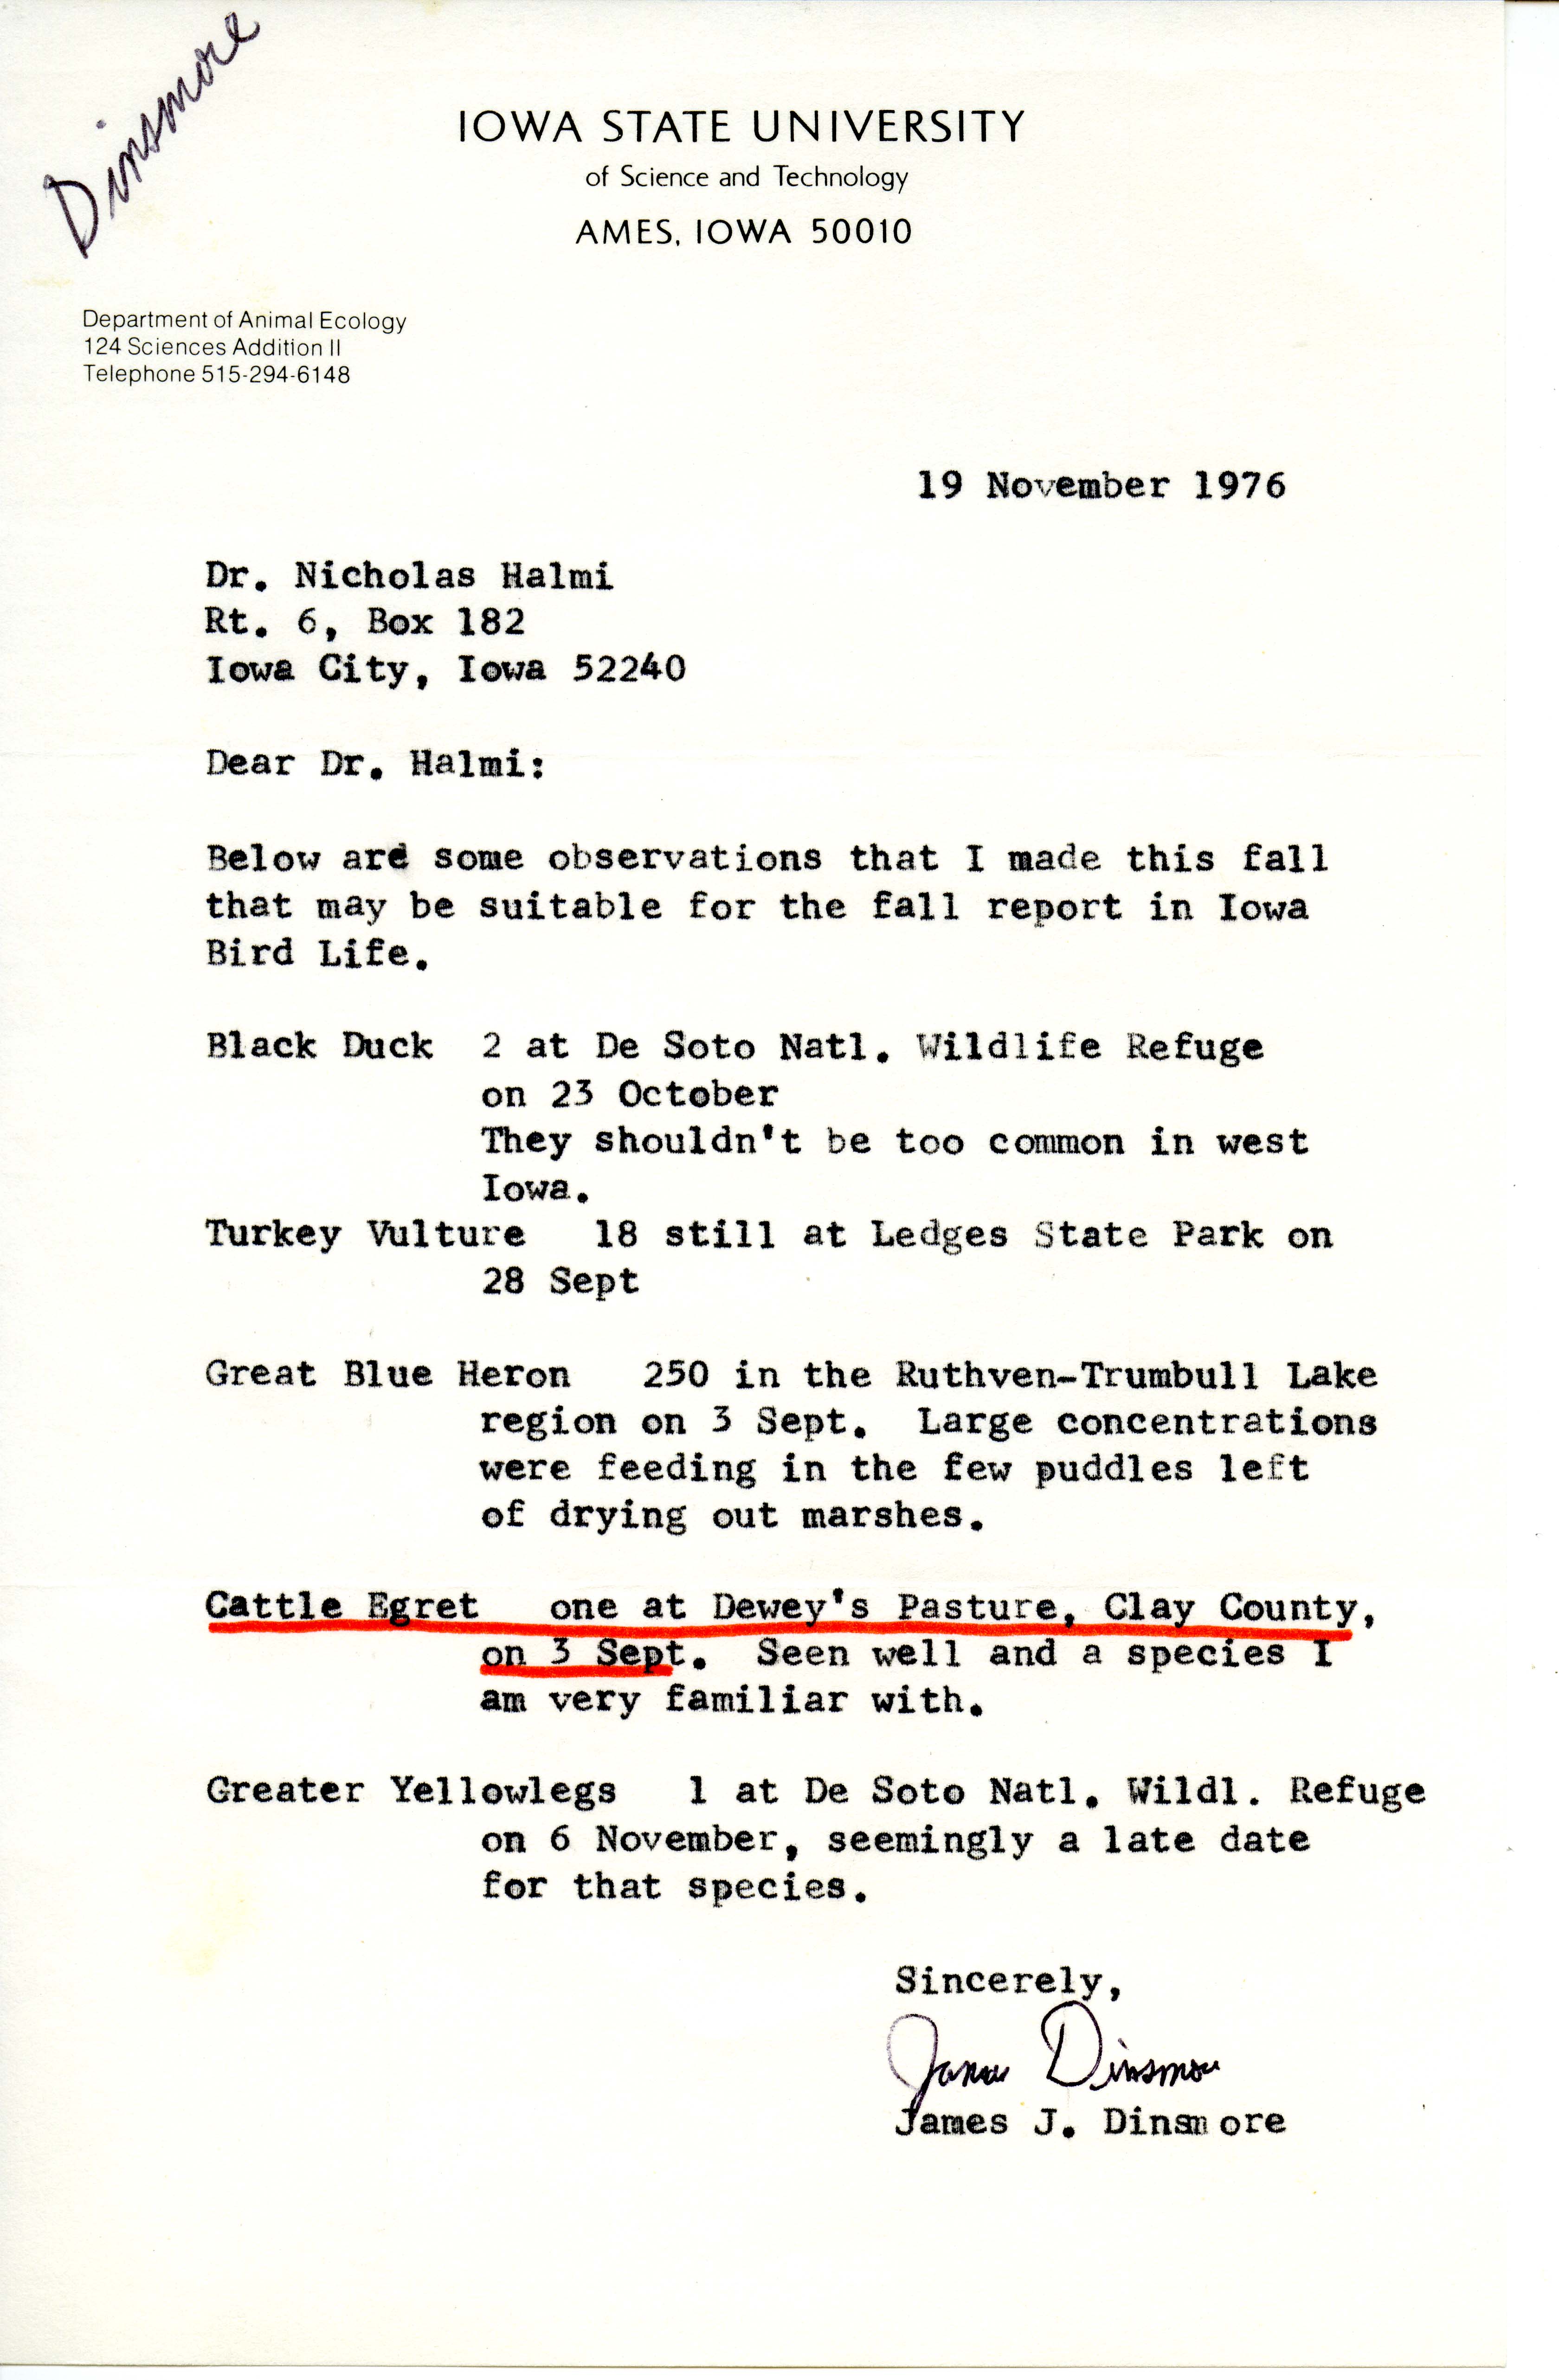 James J. Dinsmore letter to Nicholas S. Halmi regarding bird migrations, fall 1976